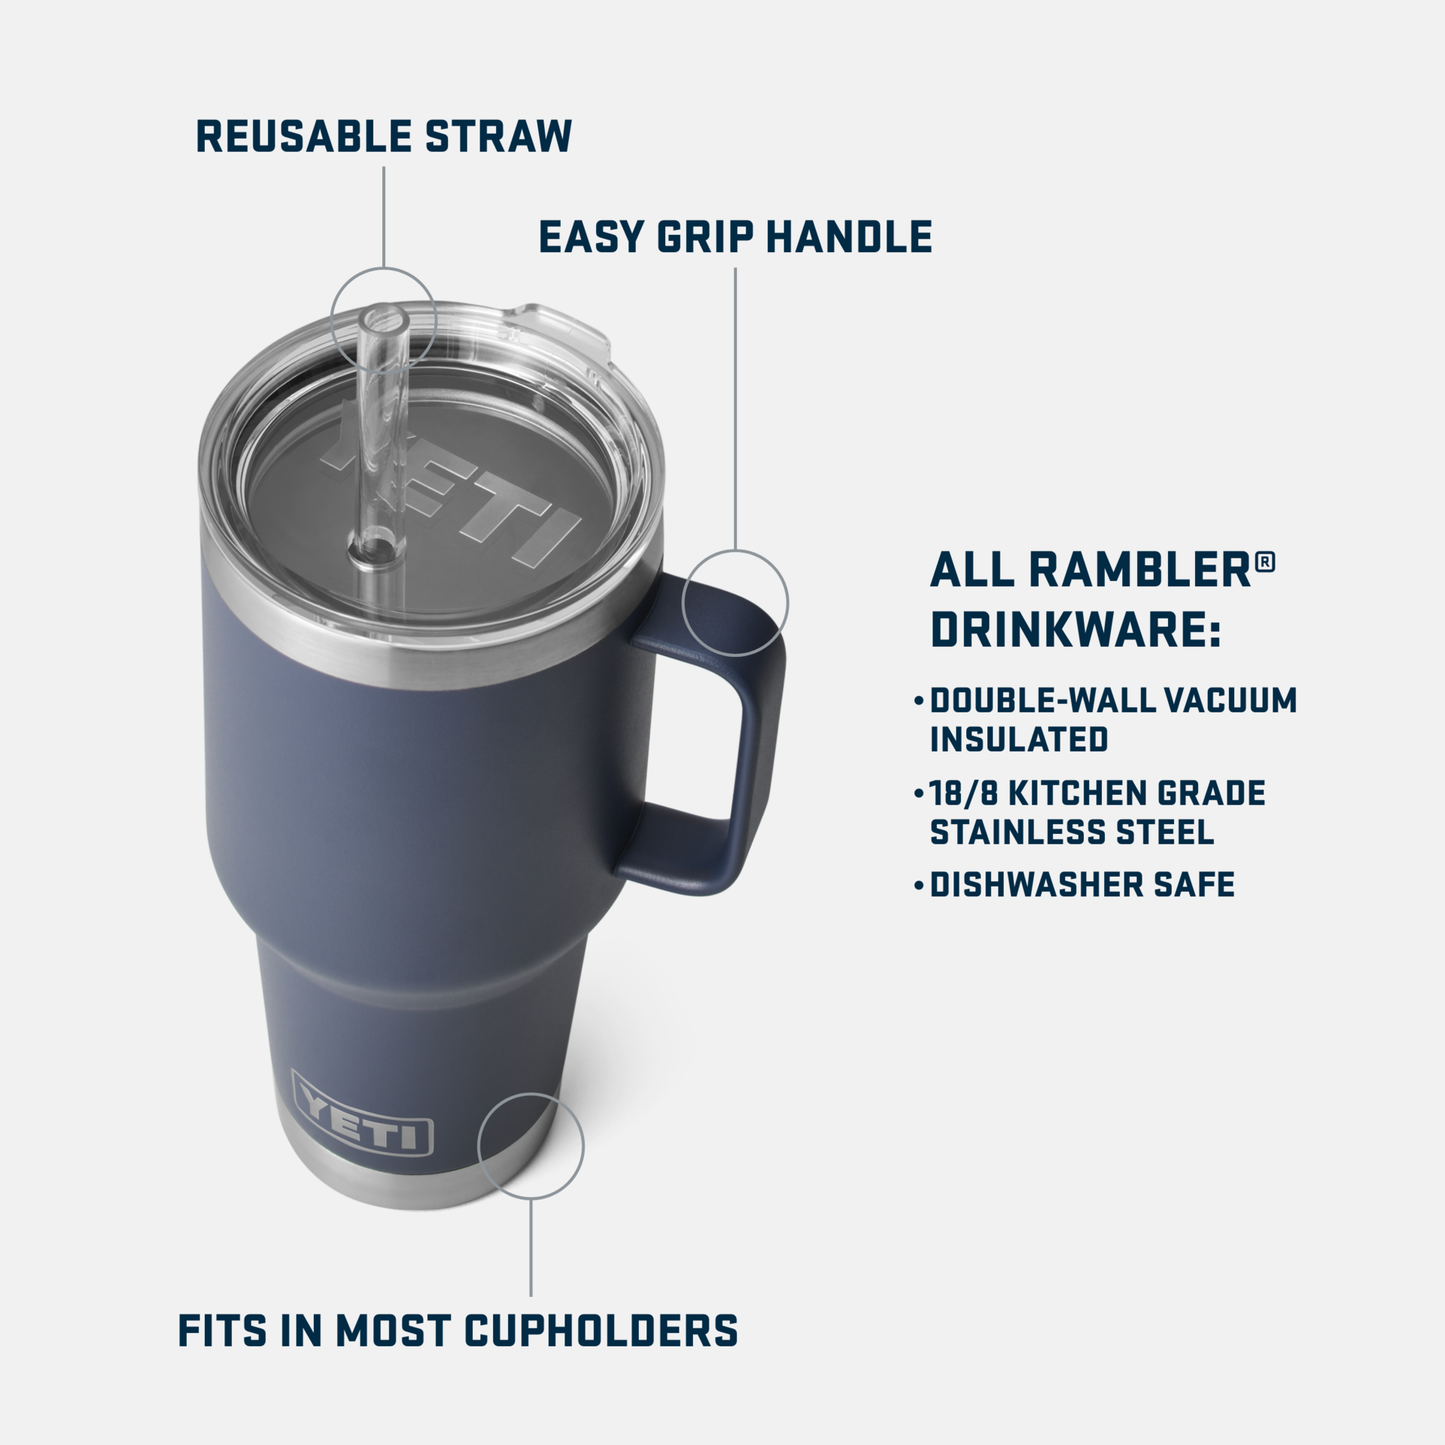 YETI Rambler® 35 oz (994 ml) Straw Mug Chartreuse